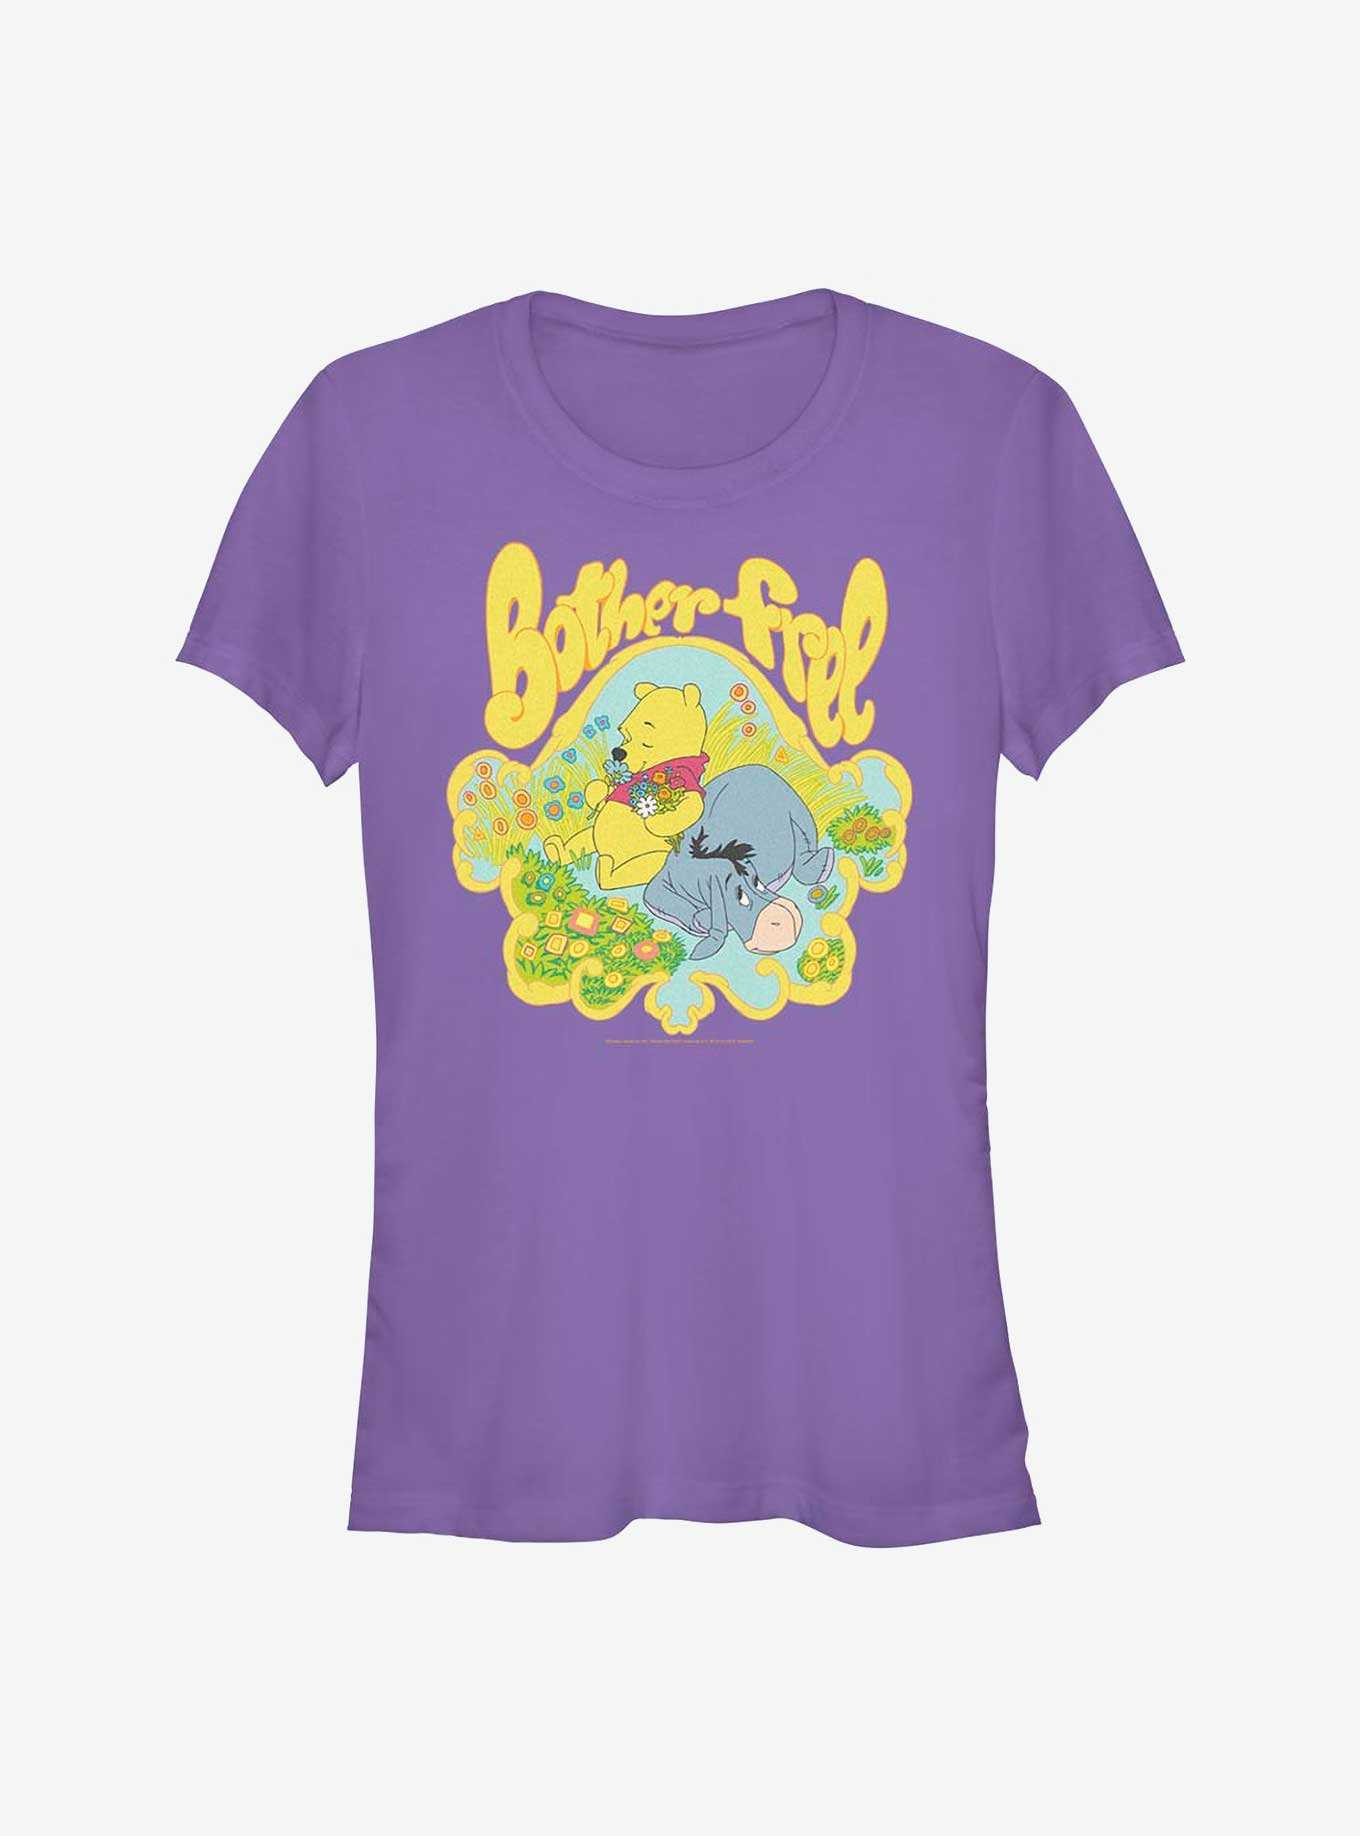 Disney Winnie The Pooh Winnie And Eeyore Bother Free Girls T-Shirt, , hi-res